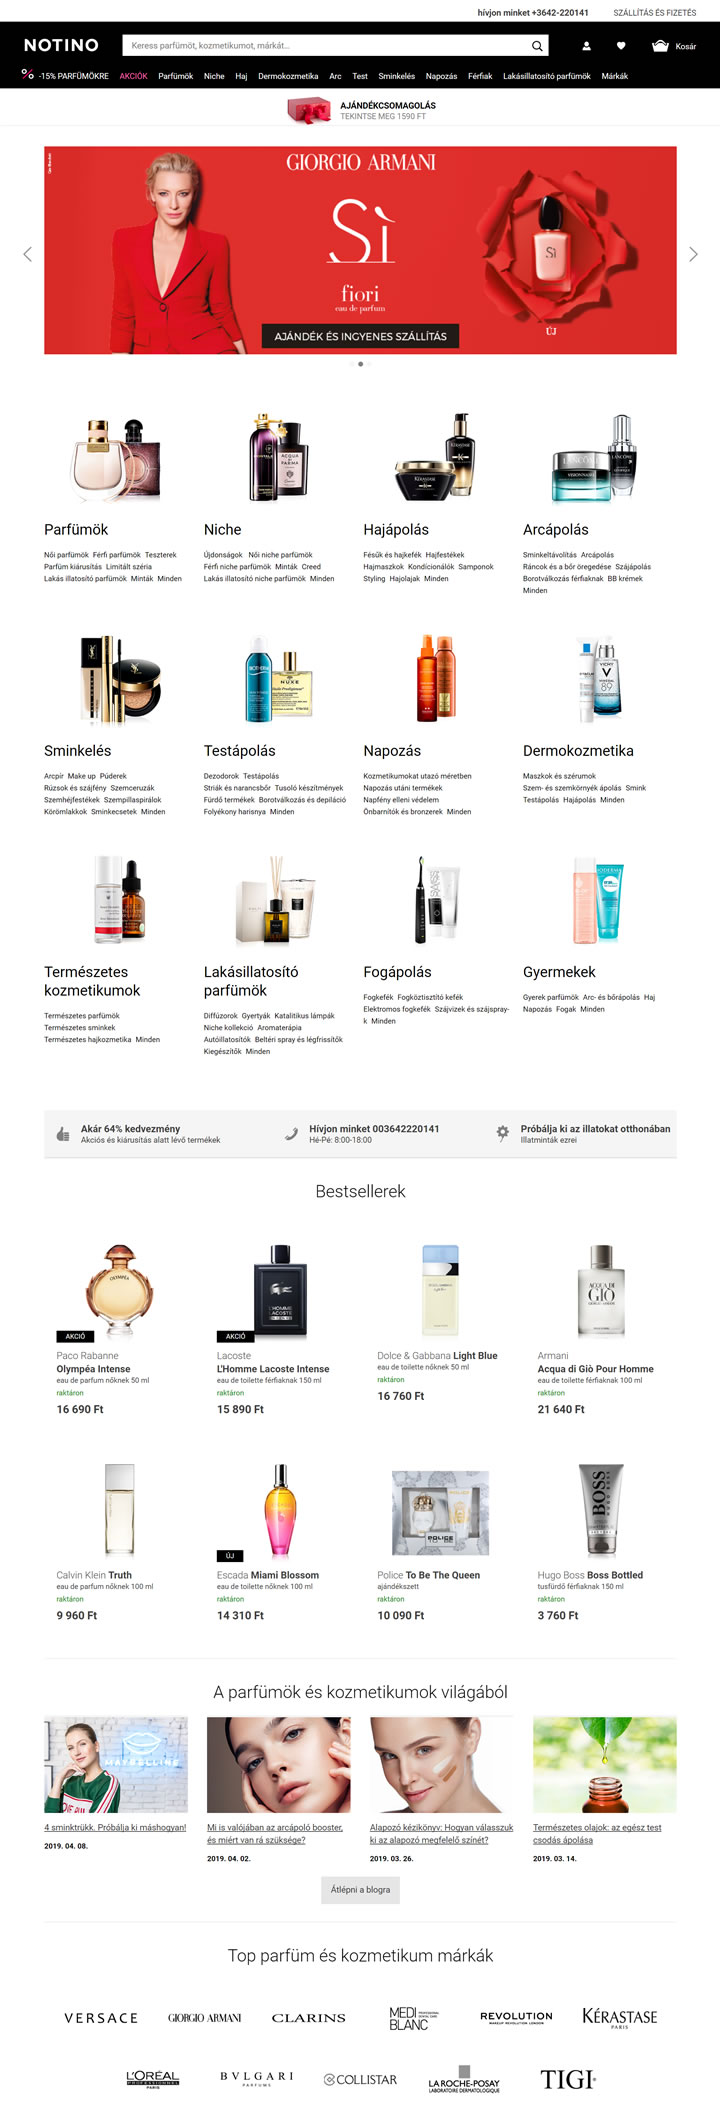 Notino匈牙利：购买香水和化妆品